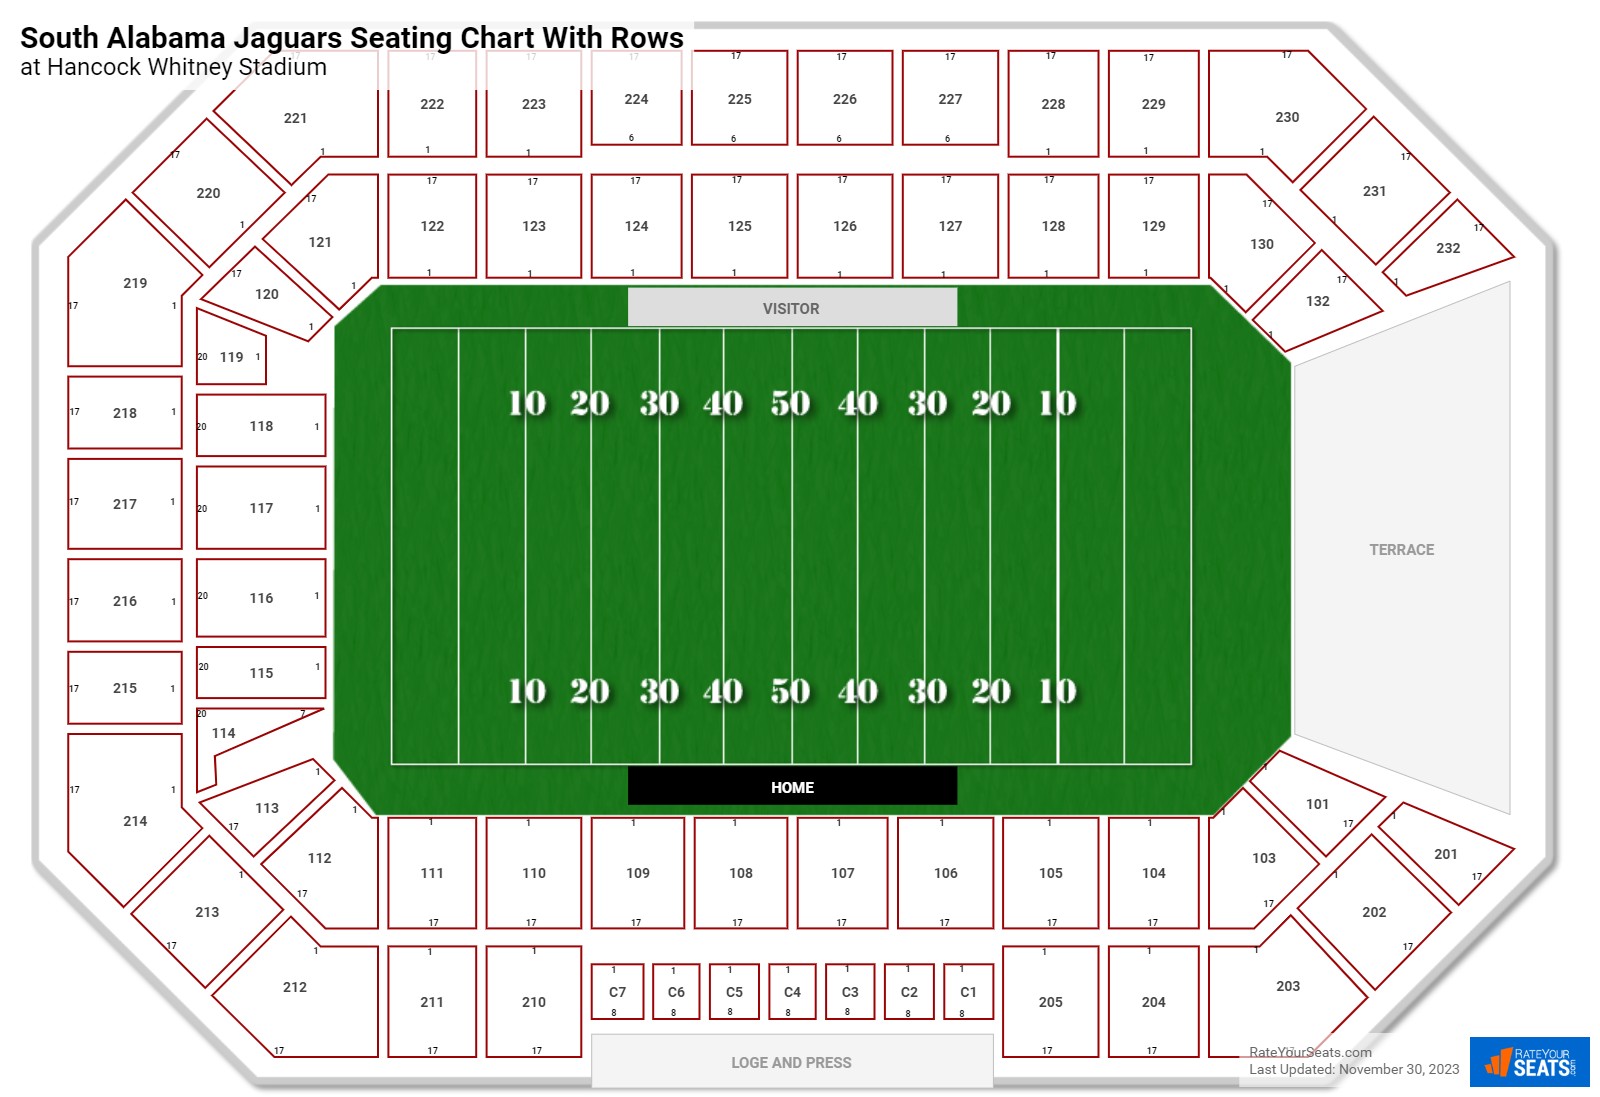 Hancock Whitney Stadium seating chart with row numbers